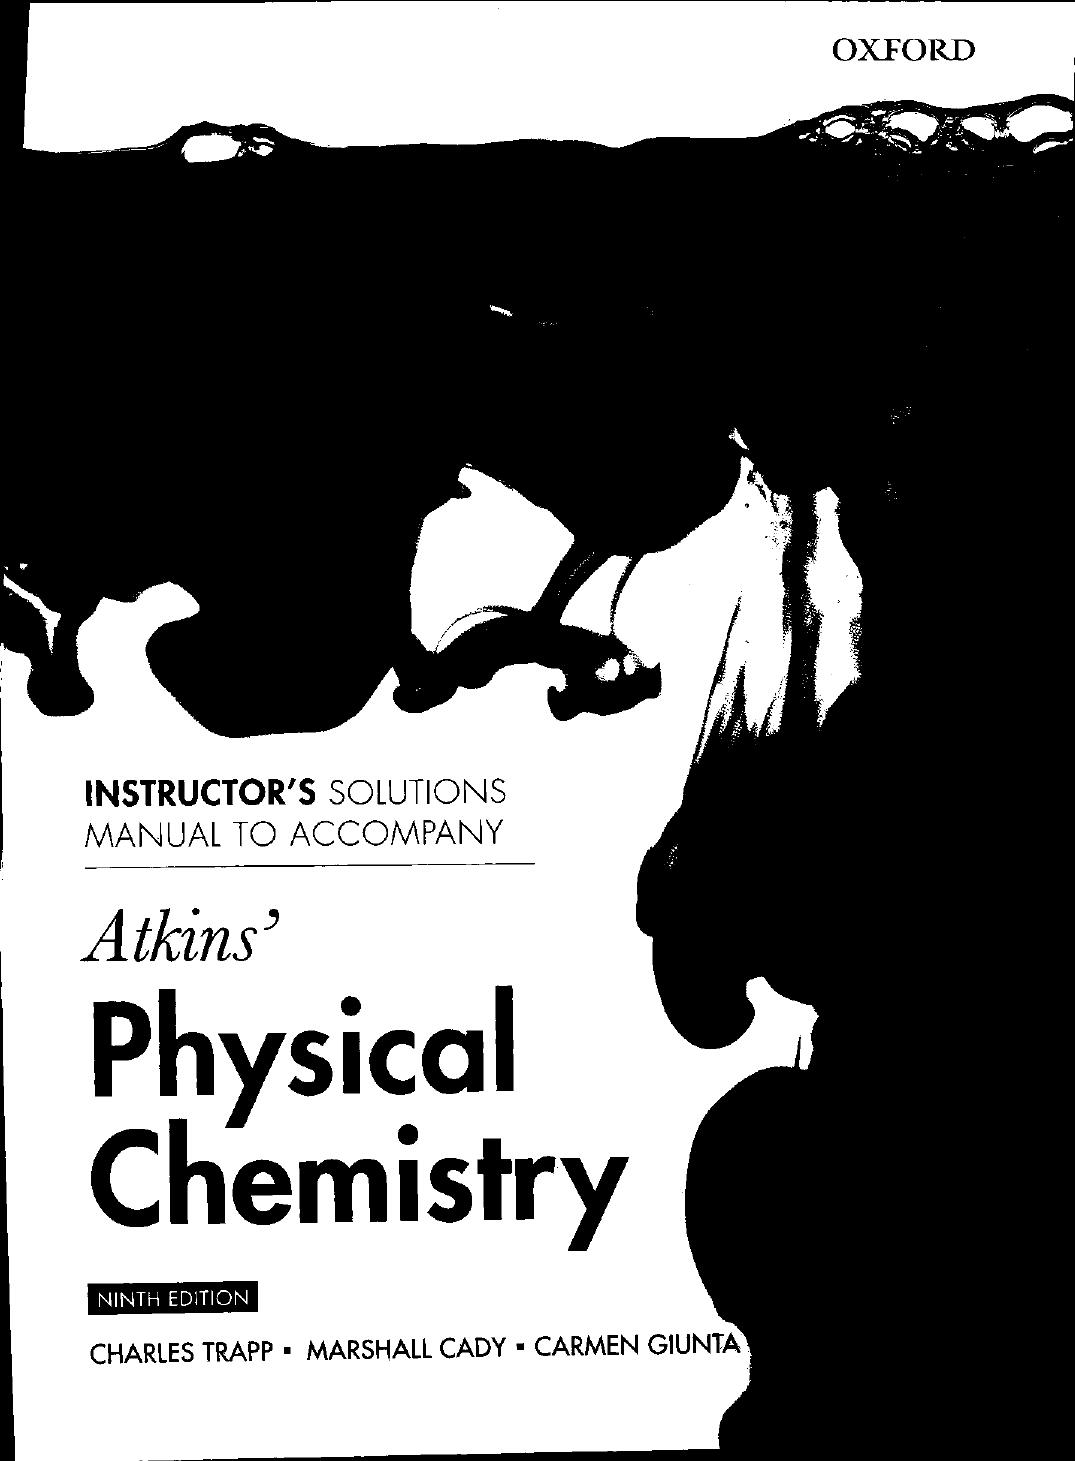 Physical Chemistry 2010